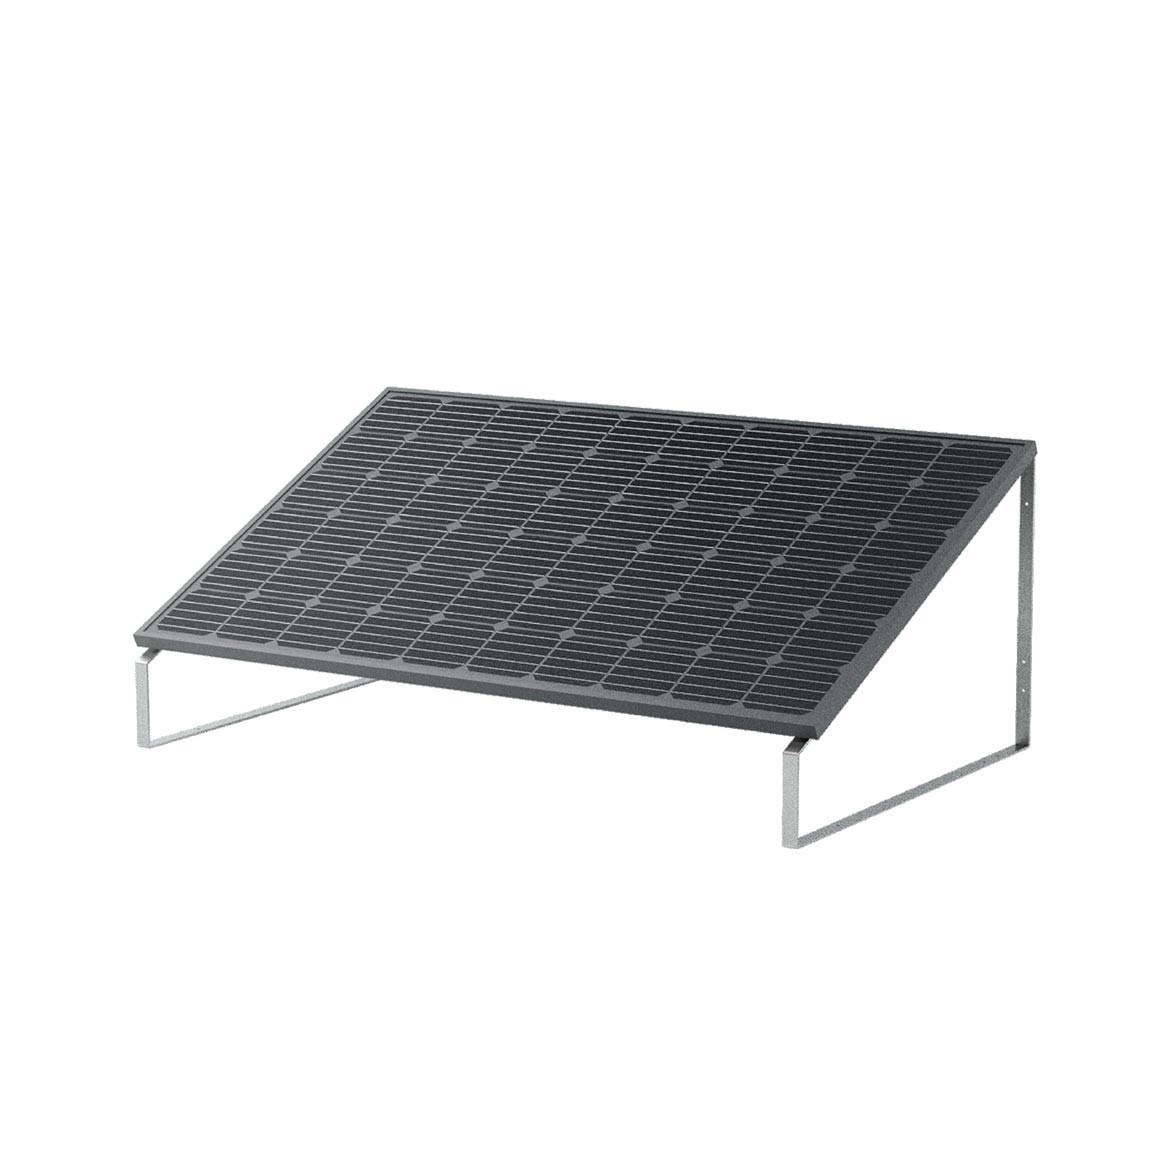 EET Solar LightMate Garten - Solarpanel zur Verlegung im Garten - Schwarz